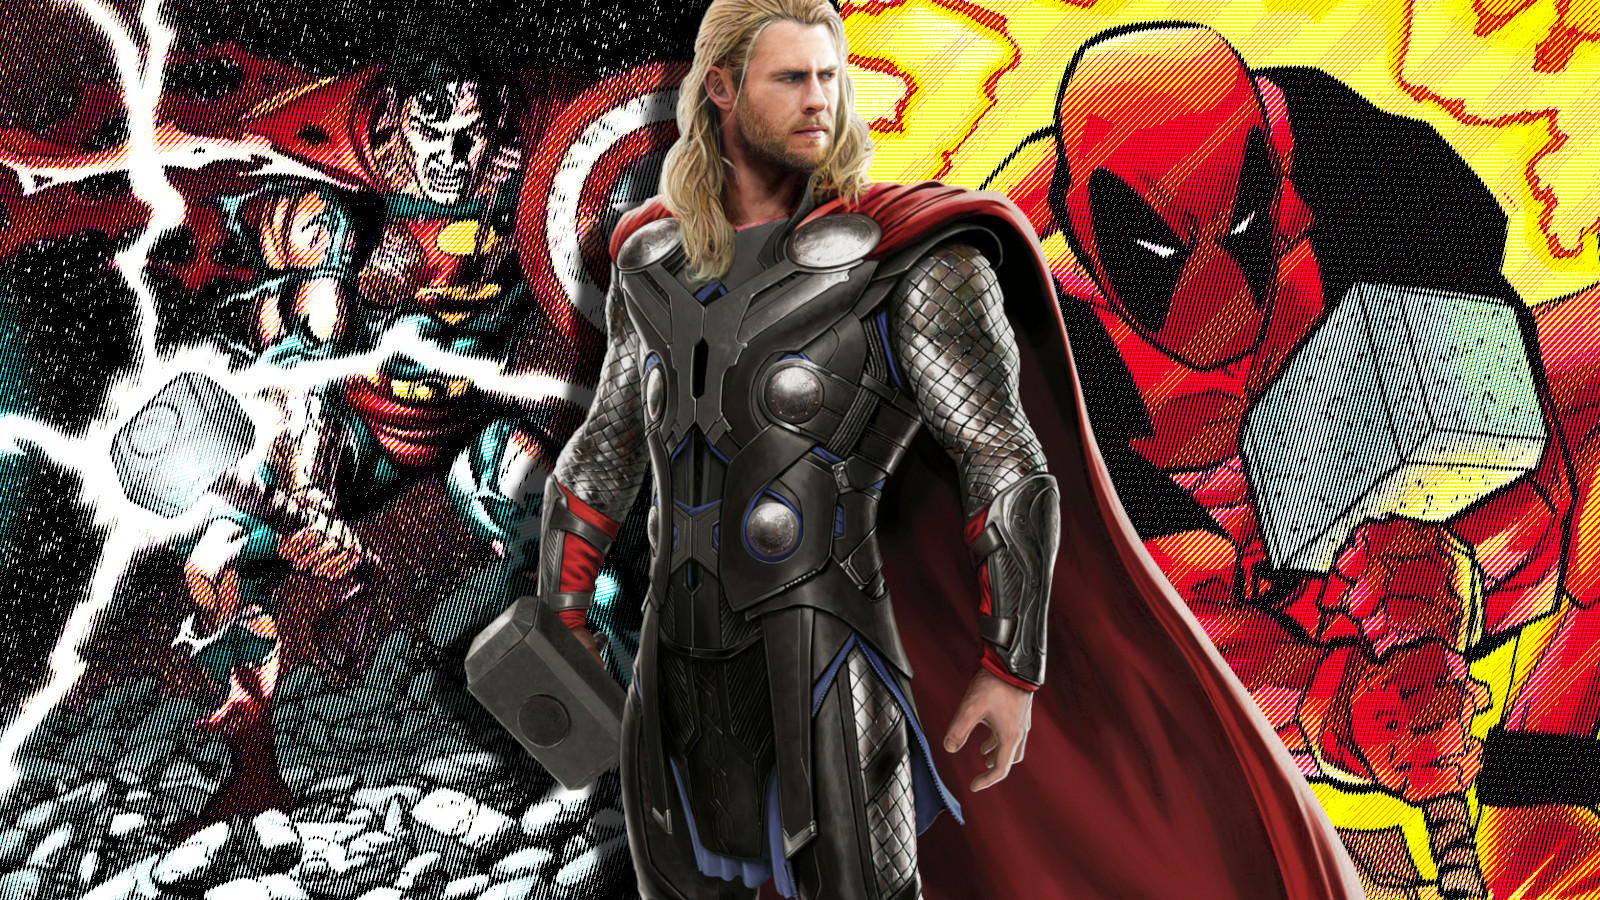 Thor the God of Thunder wielding the mighty hammer Mjollnir or